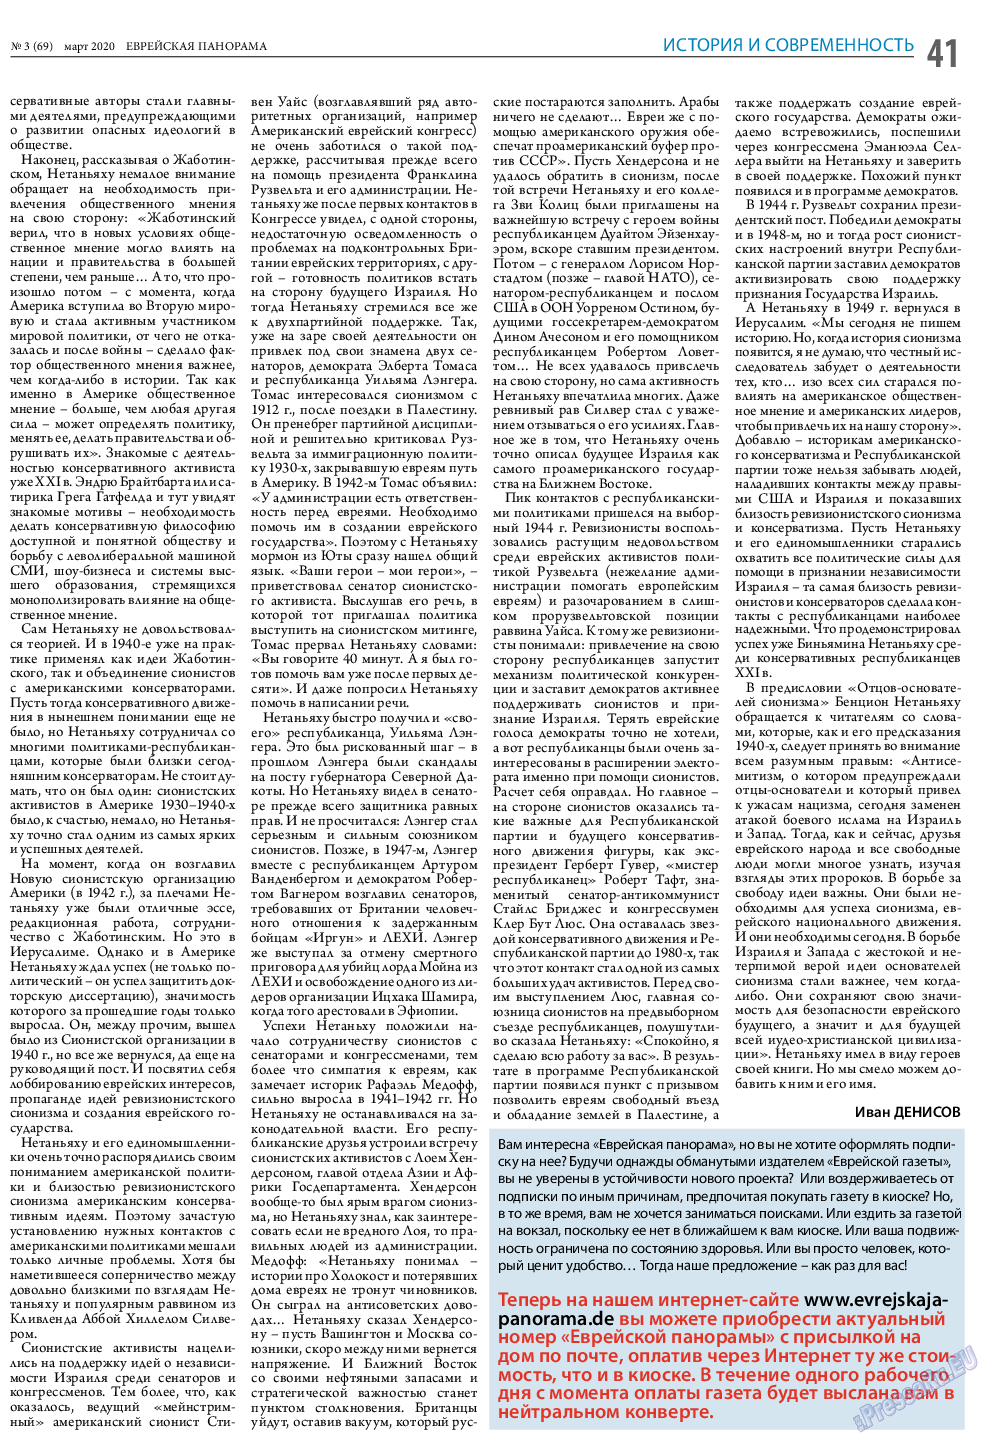 Еврейская панорама, газета. 2020 №3 стр.41